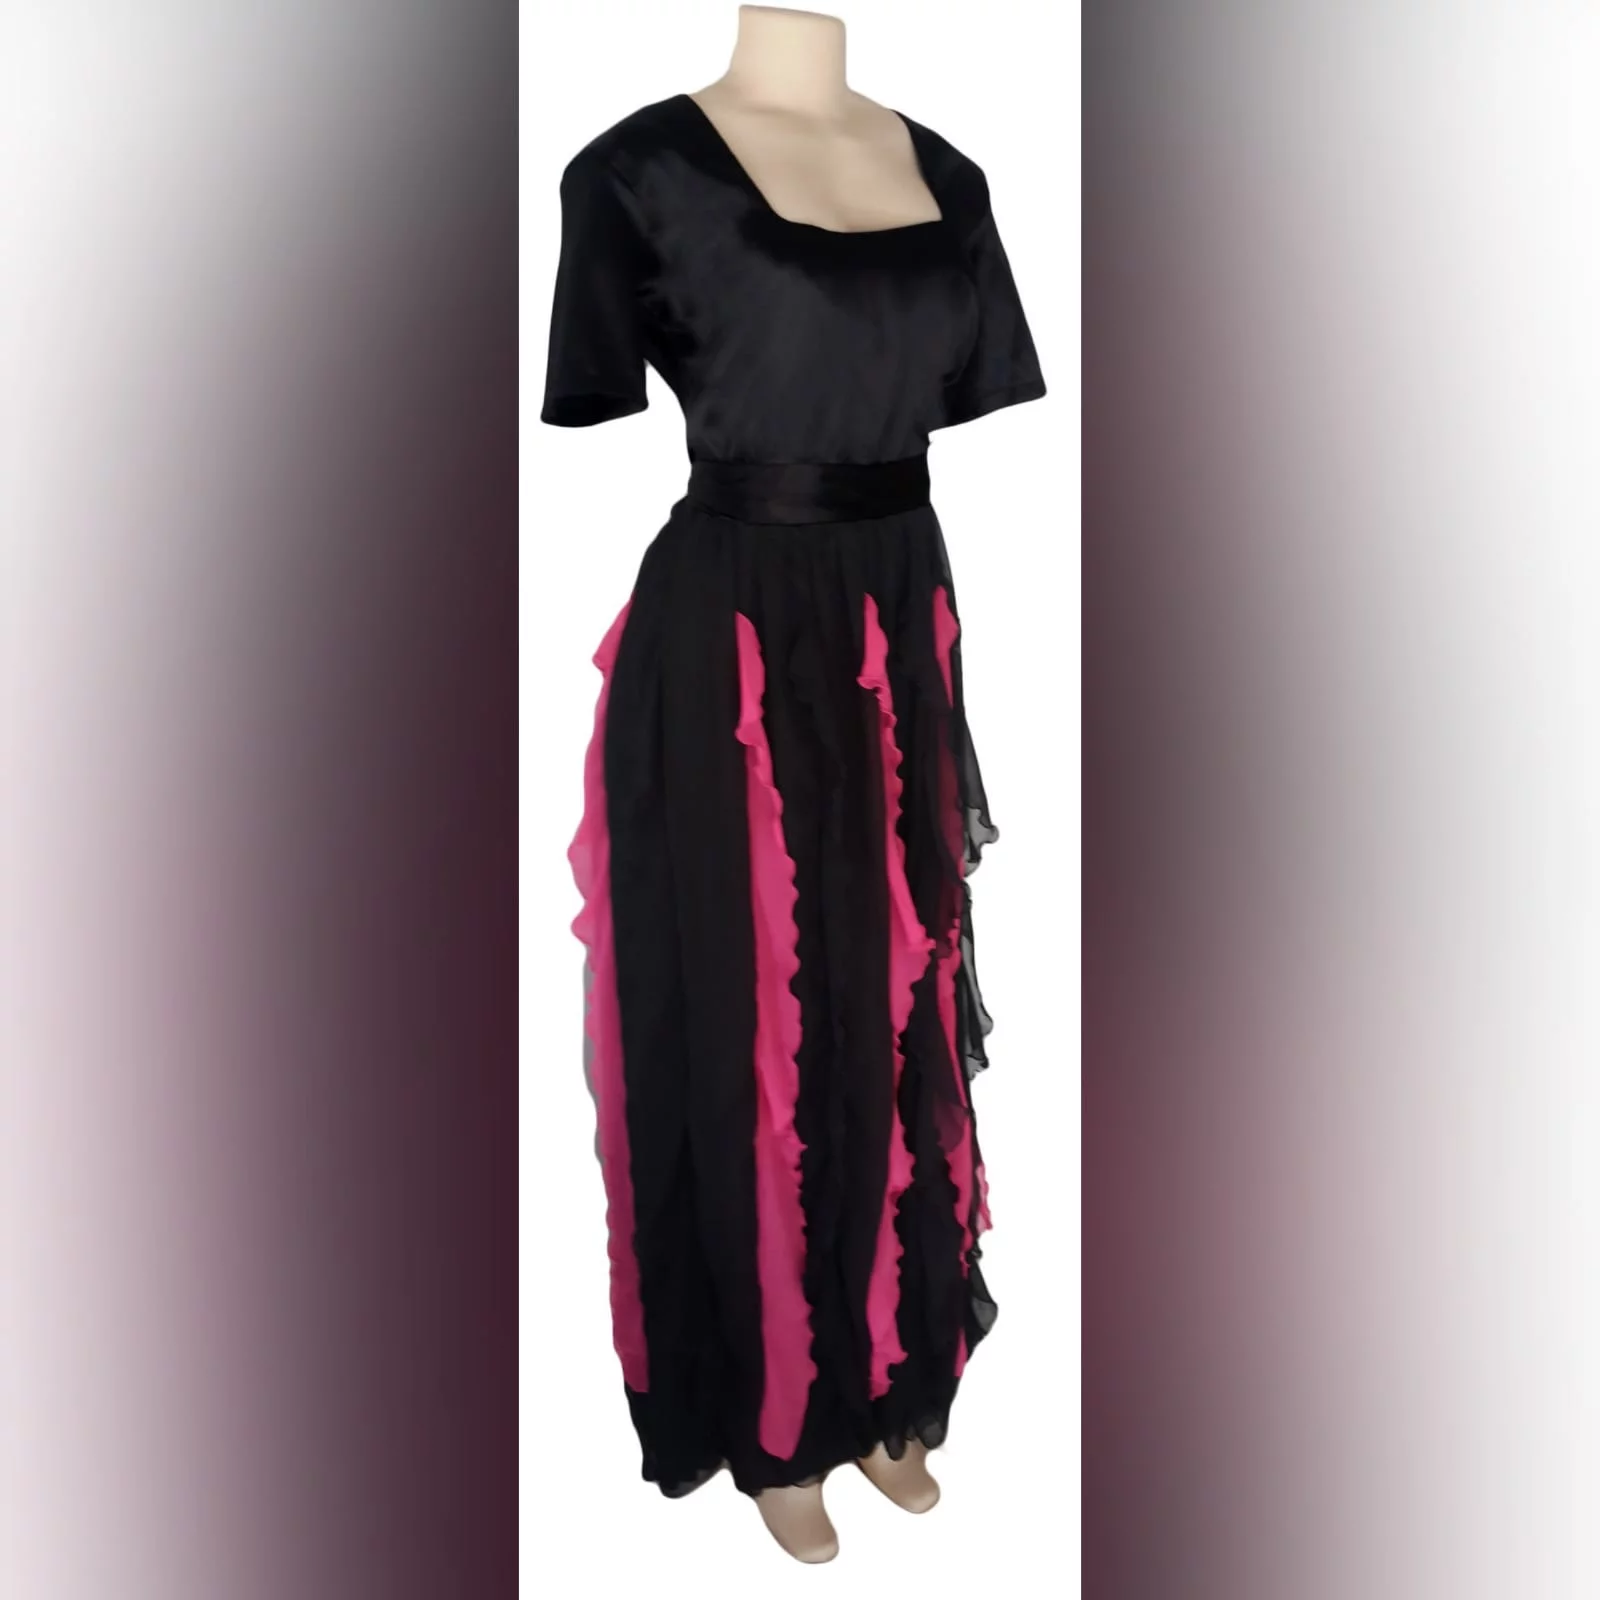 Black and pink evening dress 1 black & pink evening dress with square neckline short sleeves & vertical pink and black frills